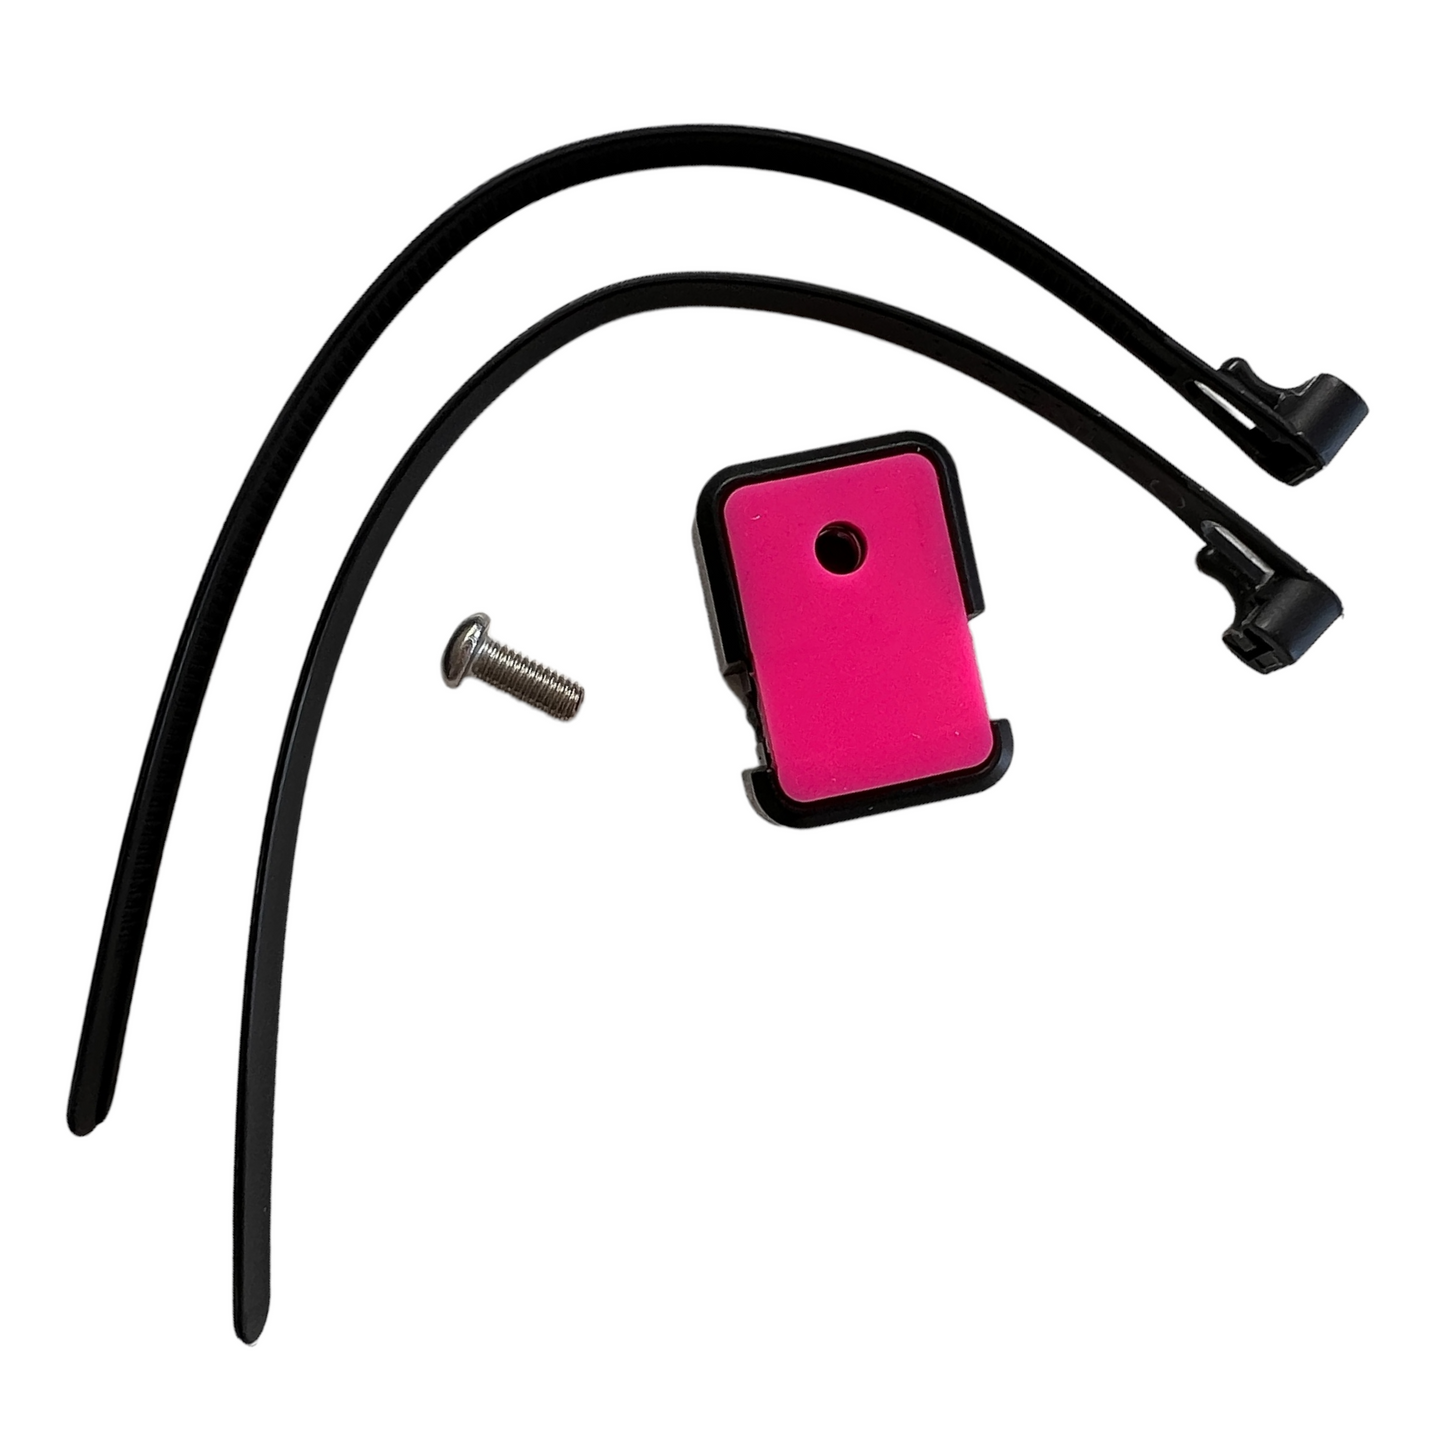 Adjustable Bracket Mount Mobility & Accessibility SPIRIT SPARKPLUGS Single Unit Pink 